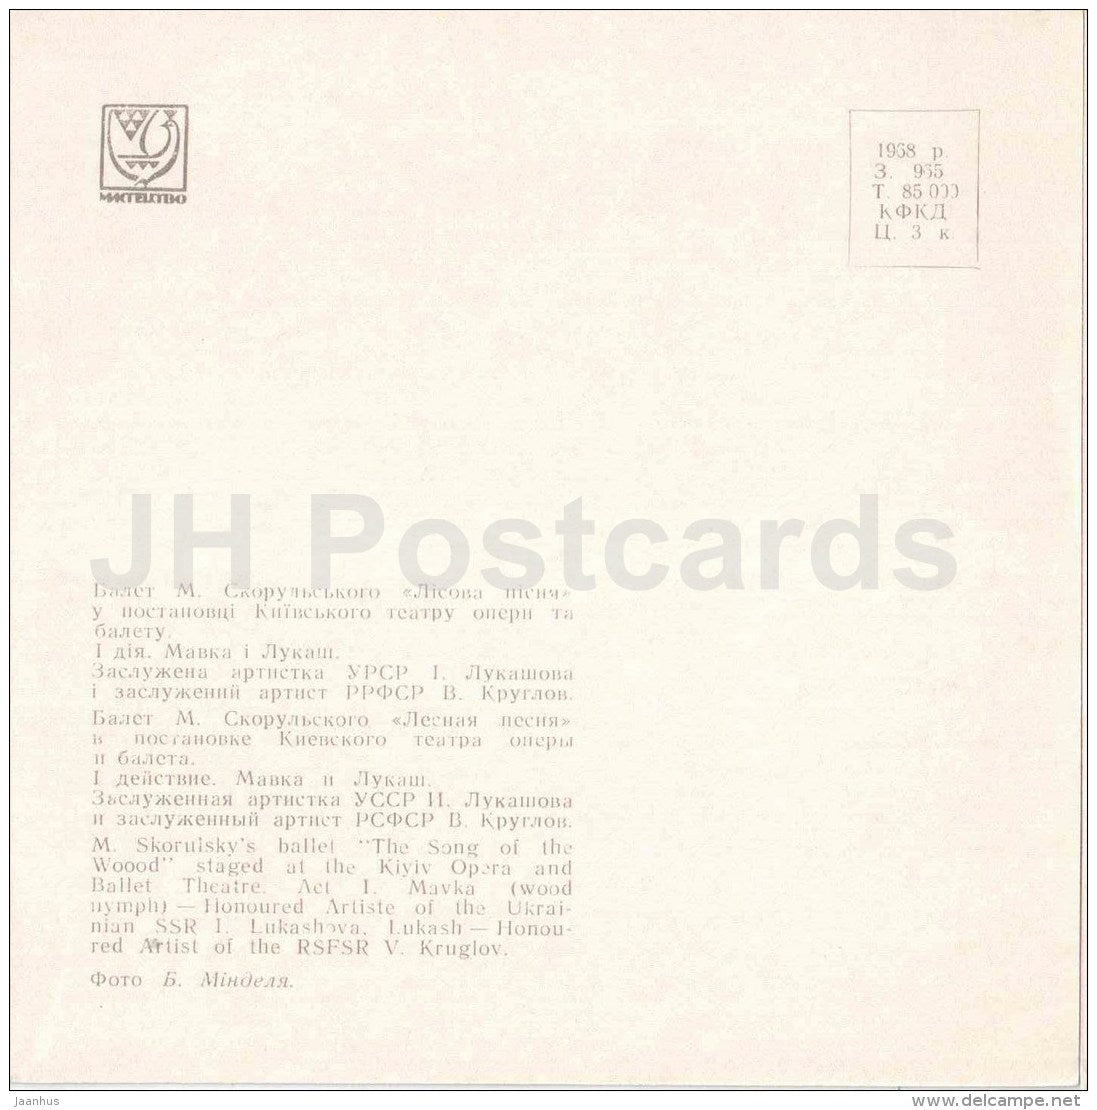 Mavka , I. Lukashova - Lukash , V. Kruglov - The Song of the Wood by Skorulsky - Ballet - 1968 - Ukraine USSR - unused - JH Postcards